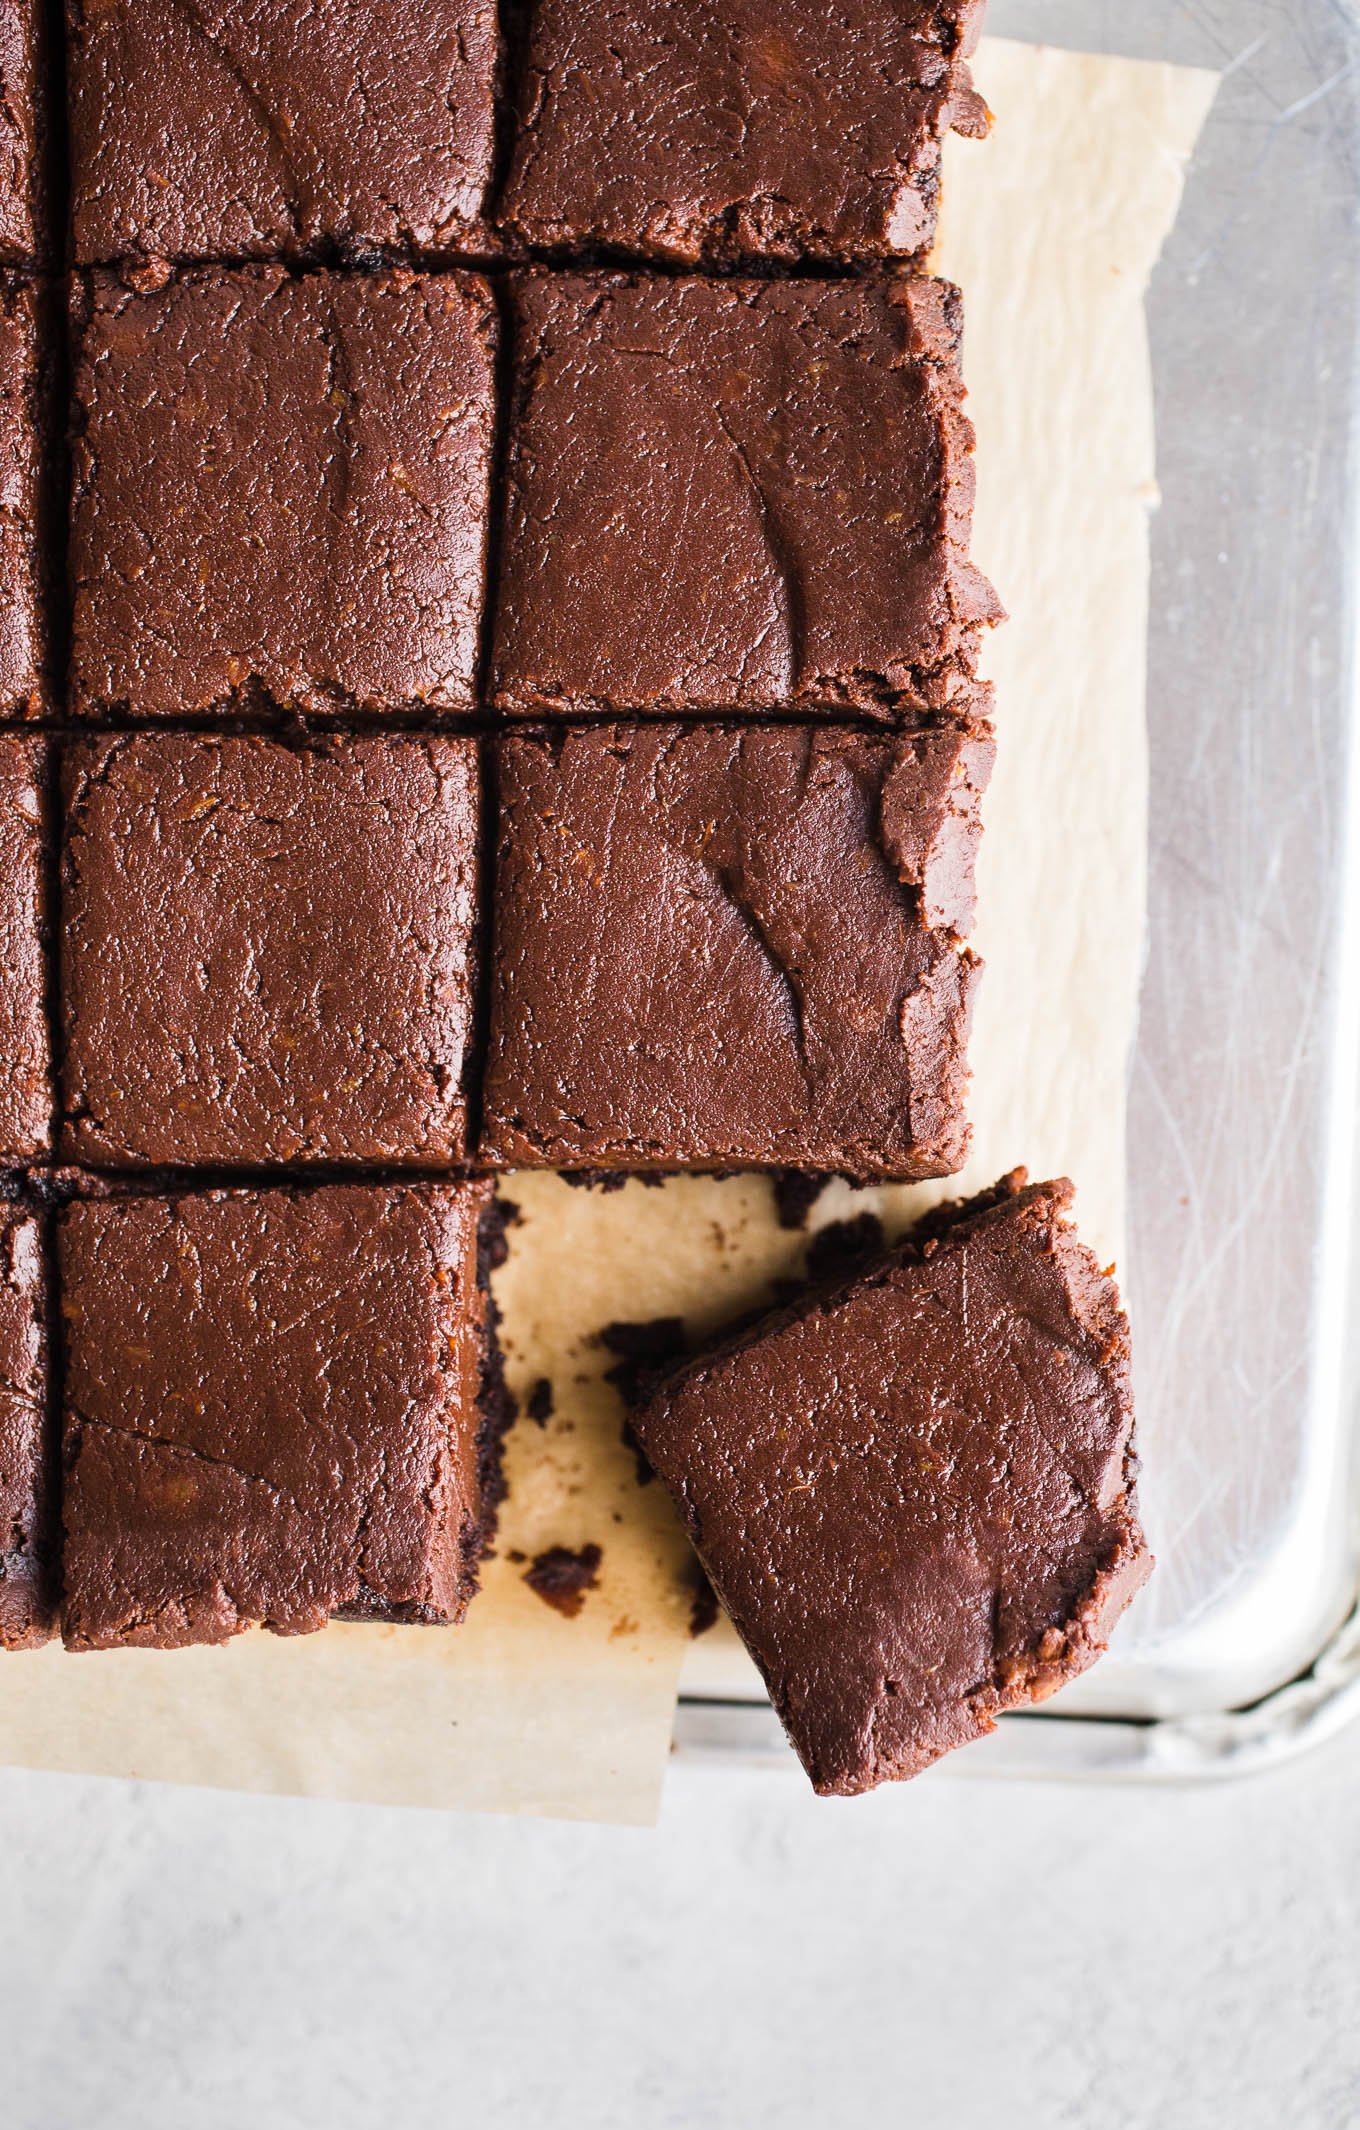 10 gluten-free brownie recipes